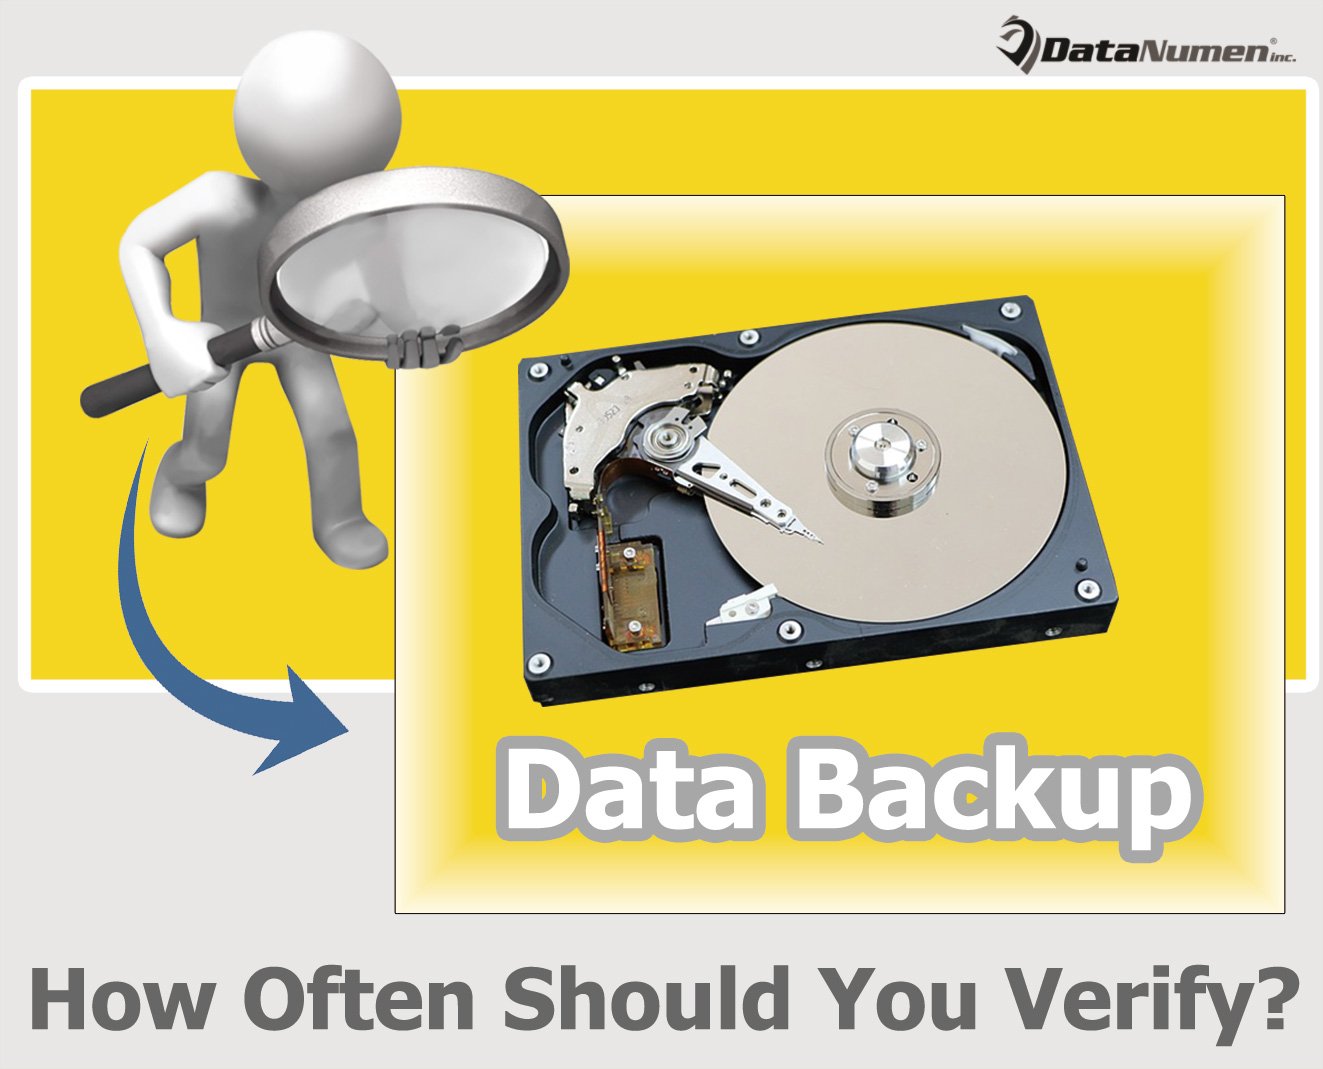 How Often Should You Verify Data Backups?